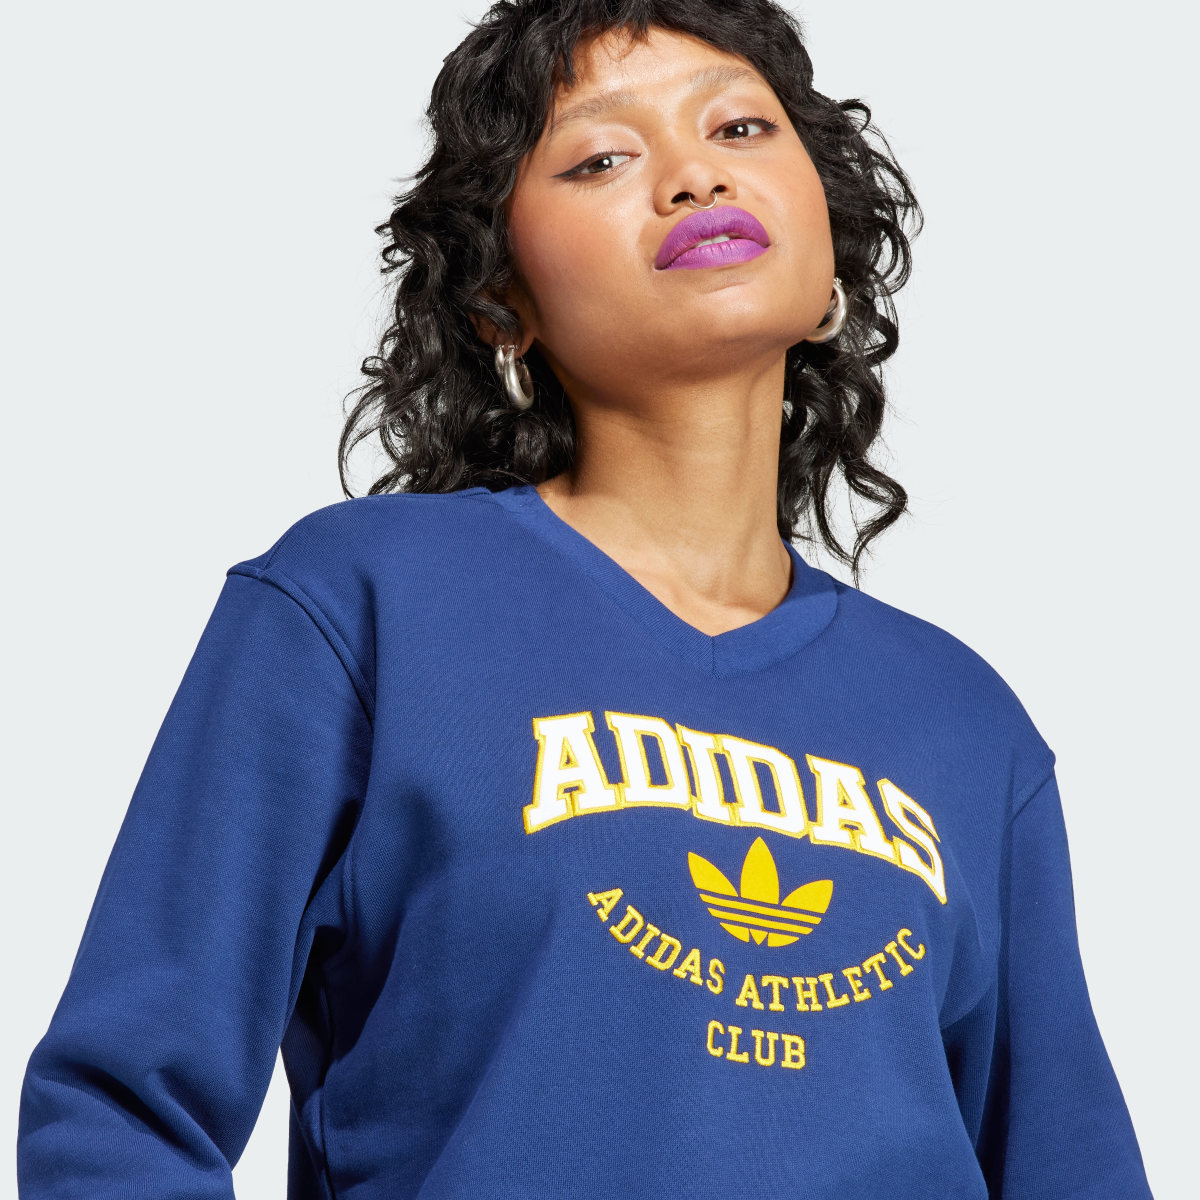 Adidas College Graphic Sweatshirt. 6